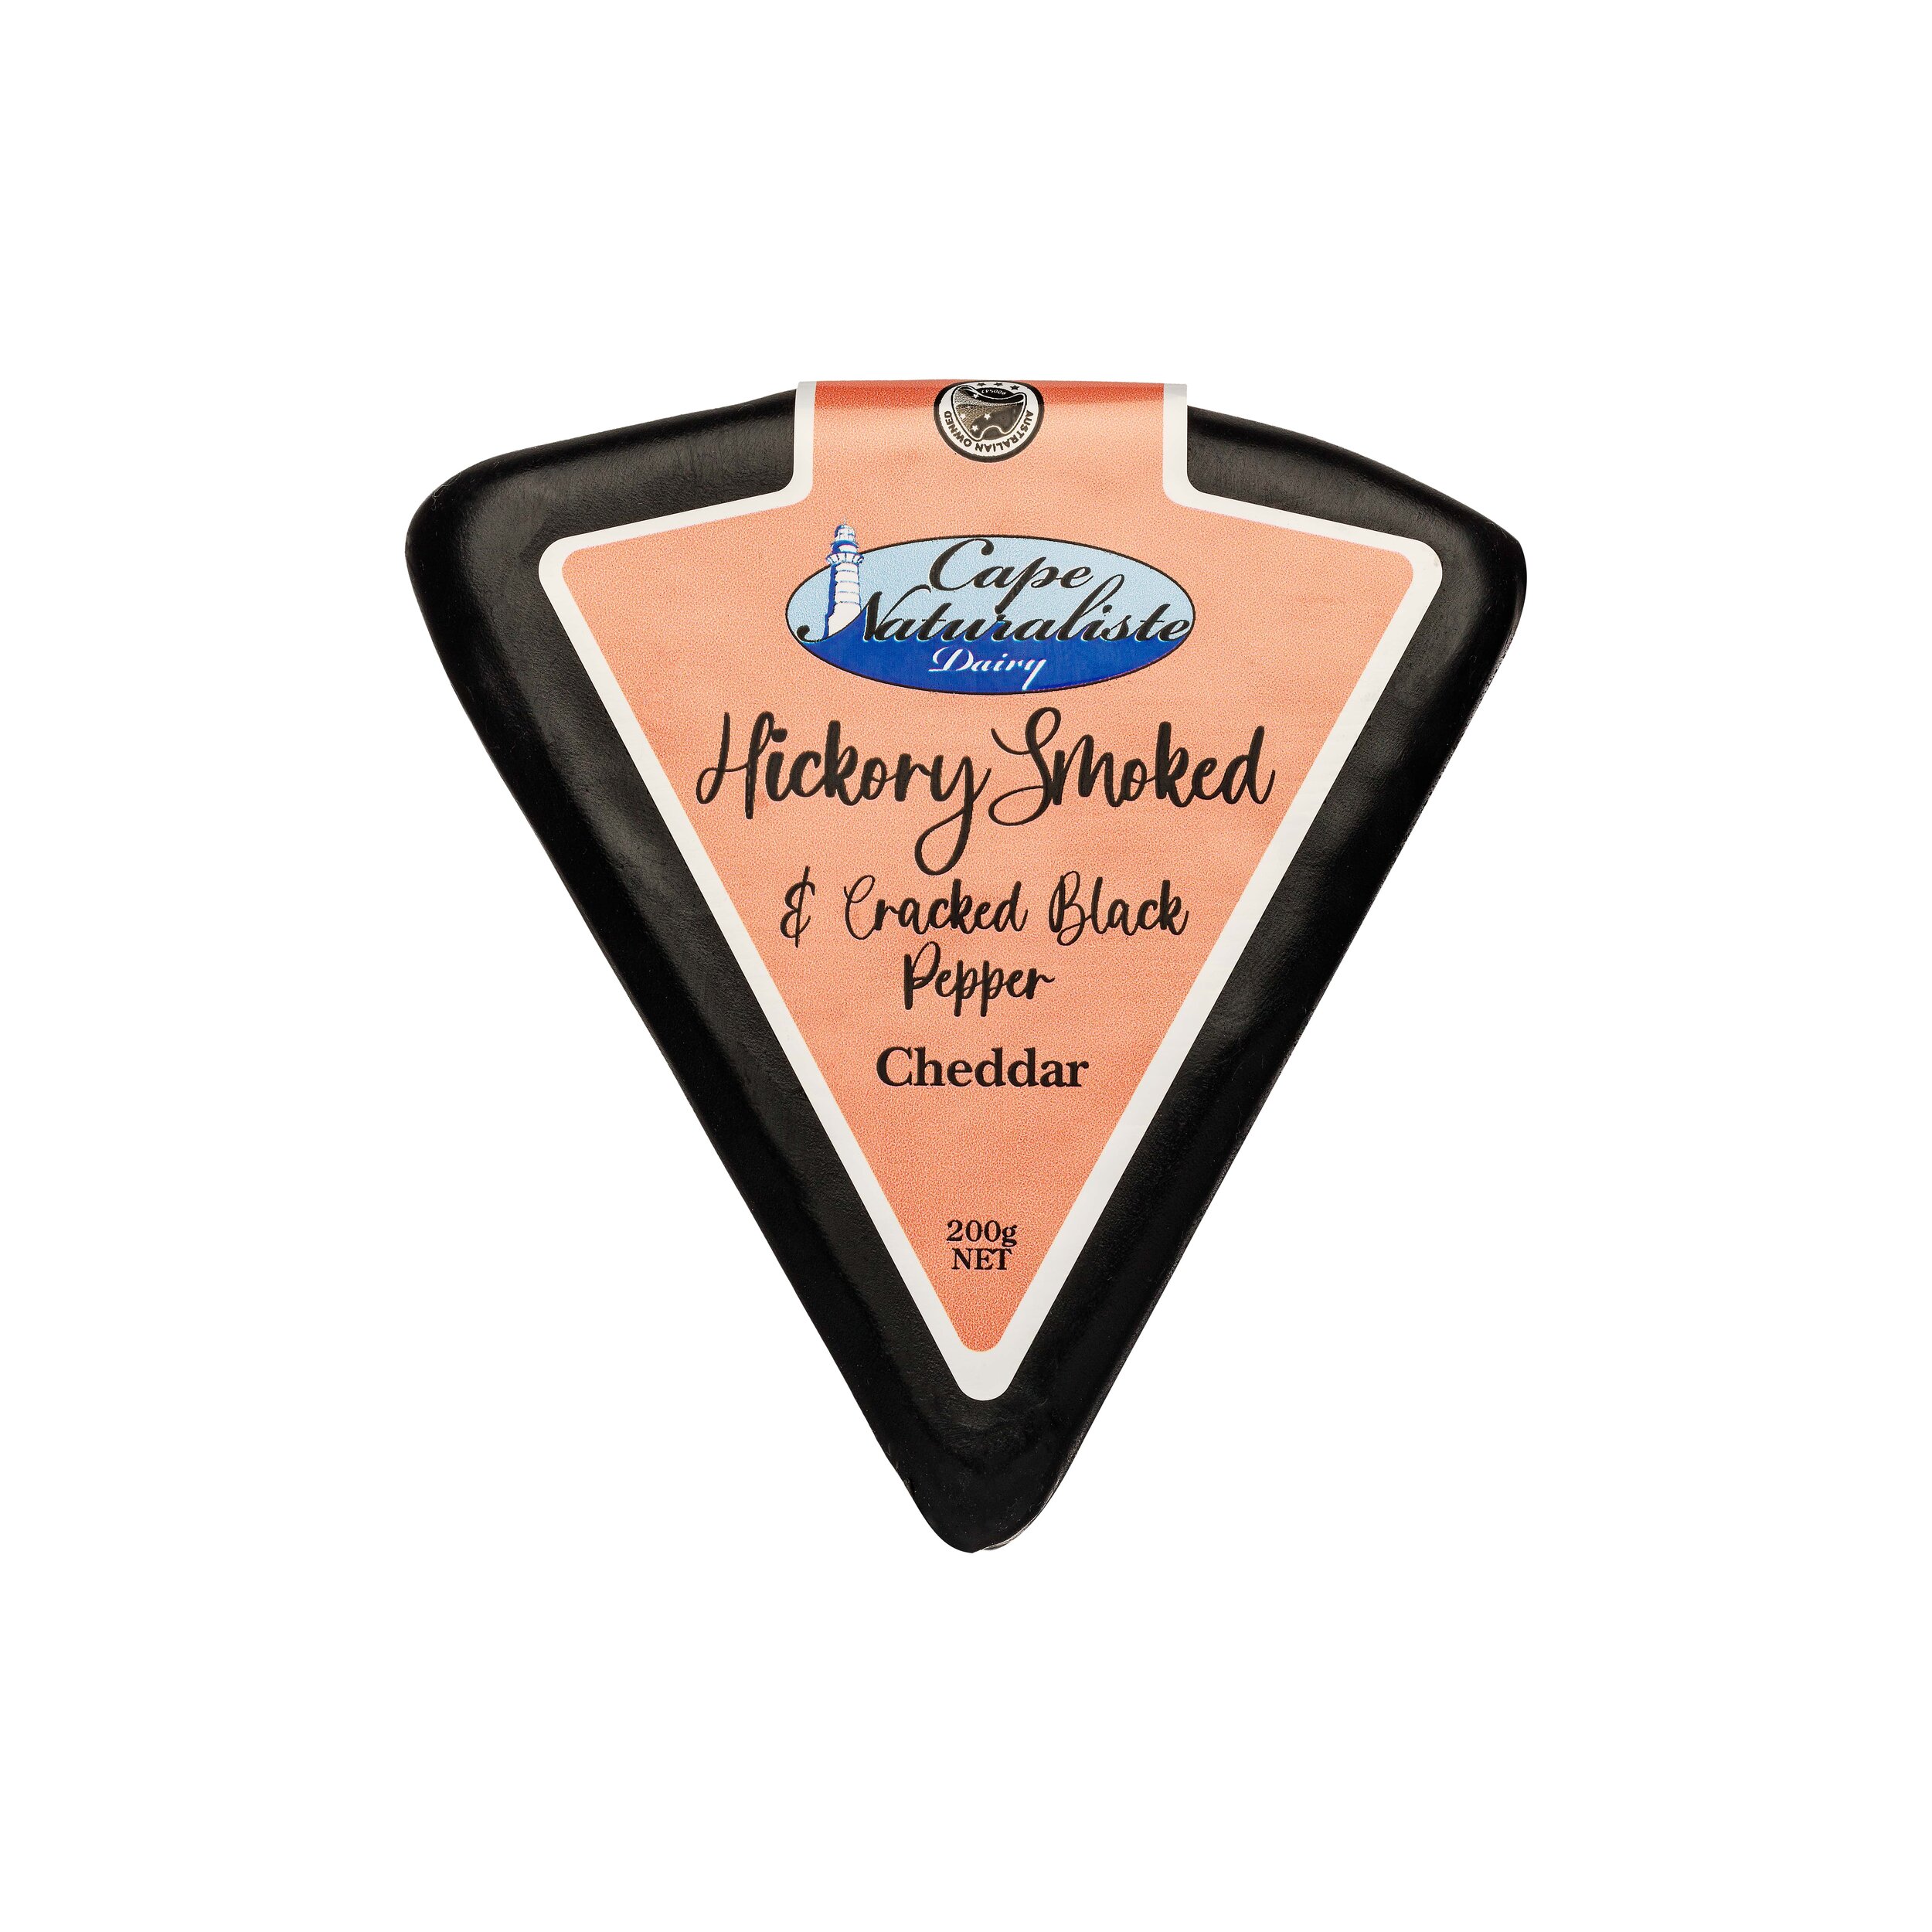 200g - Hickory Smoked 2021